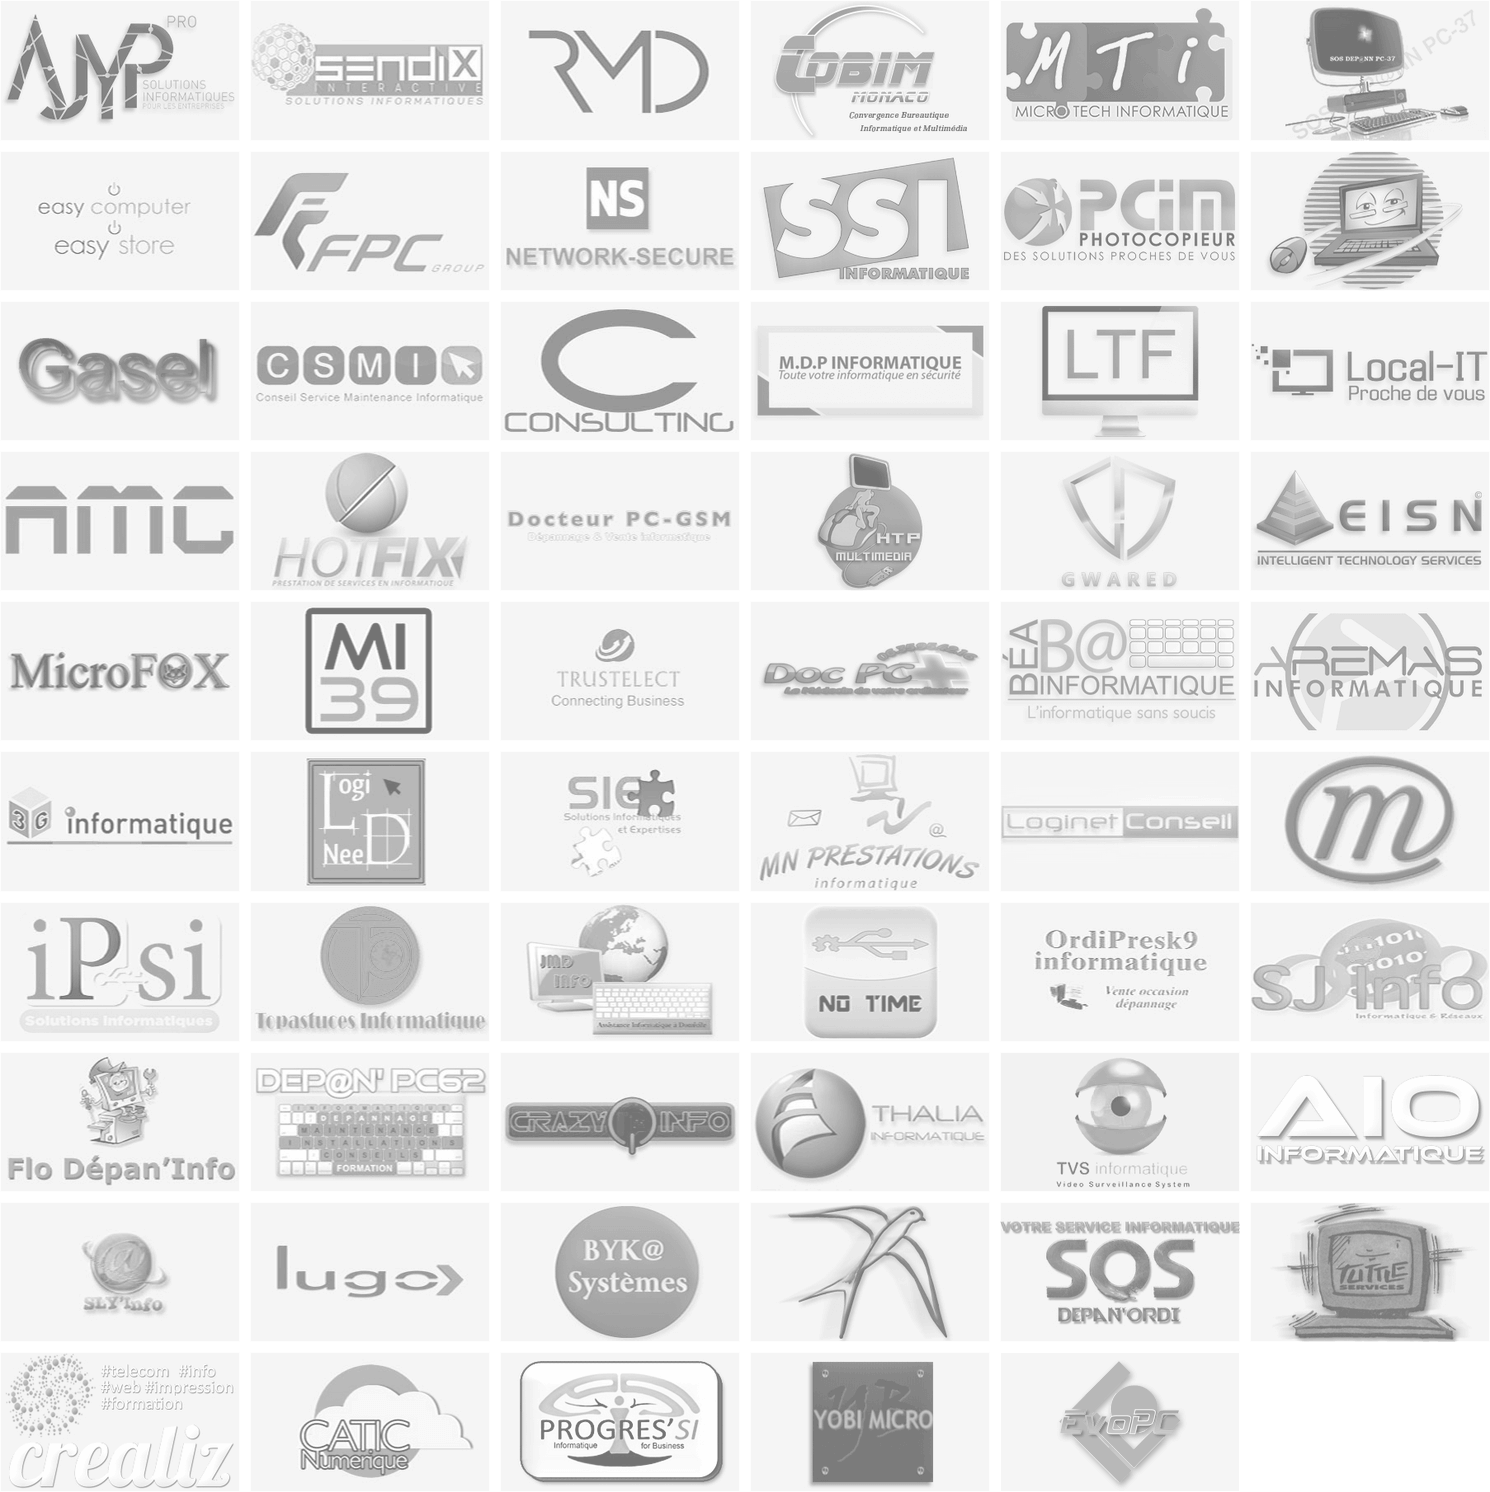 Logos des partenaires Data LabCenter